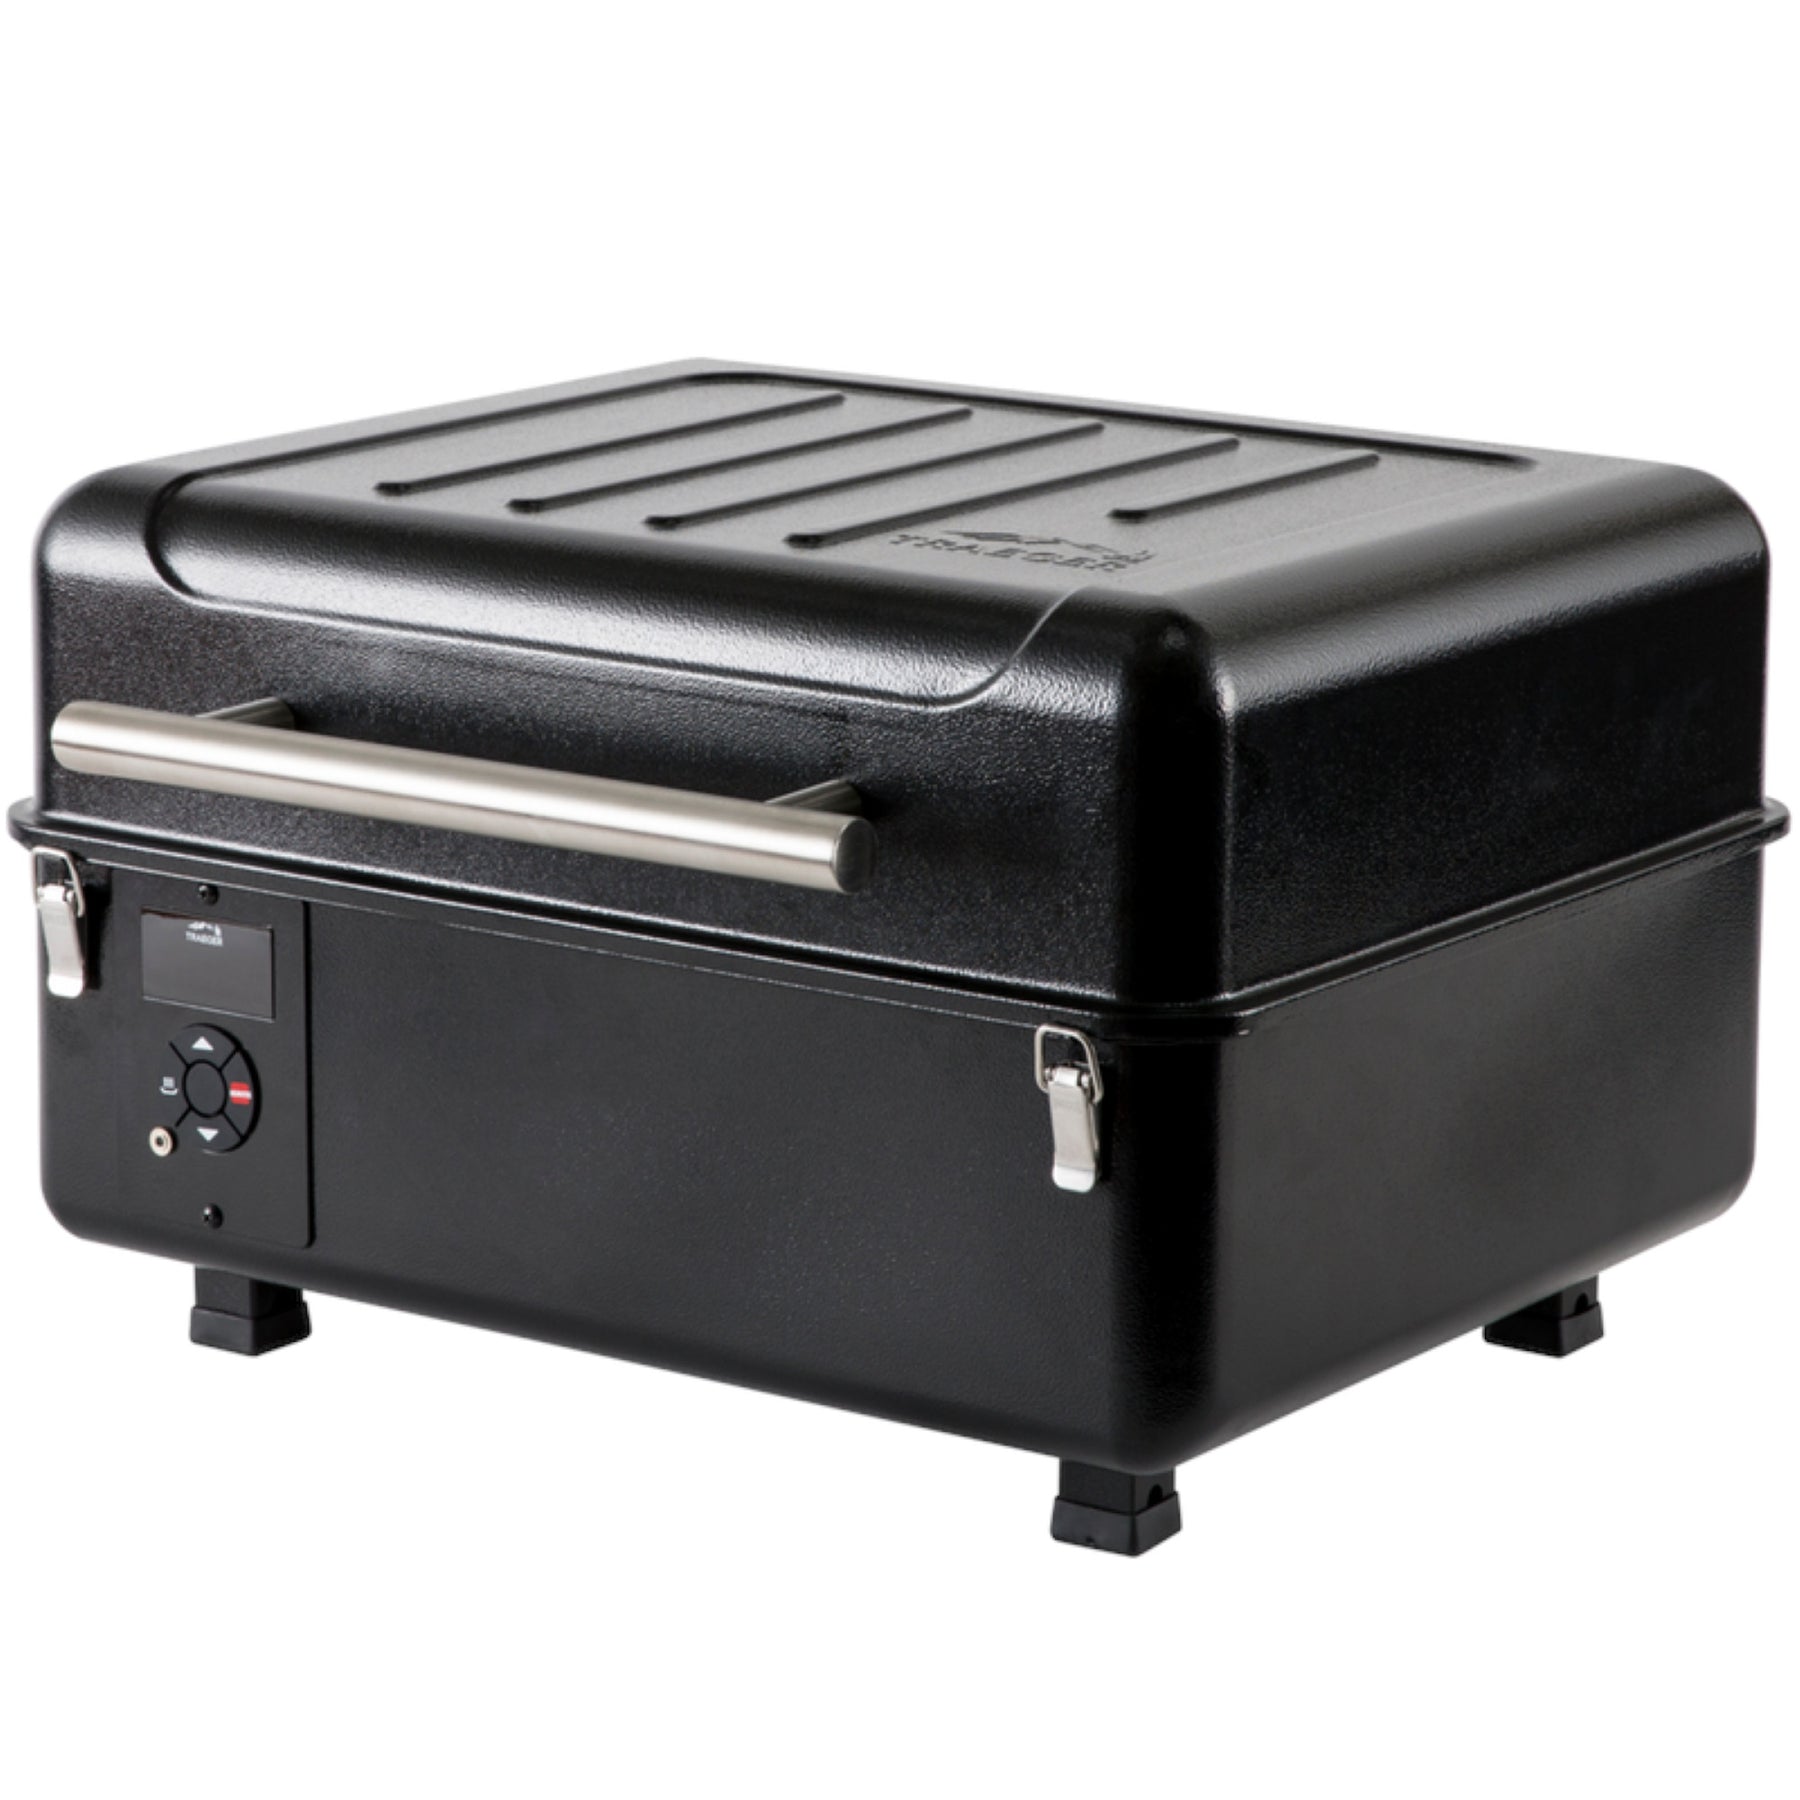 Traeger Ranger Barbecue portatile a Pellet - Comodissimo e arriva a temperatura in un attimo!